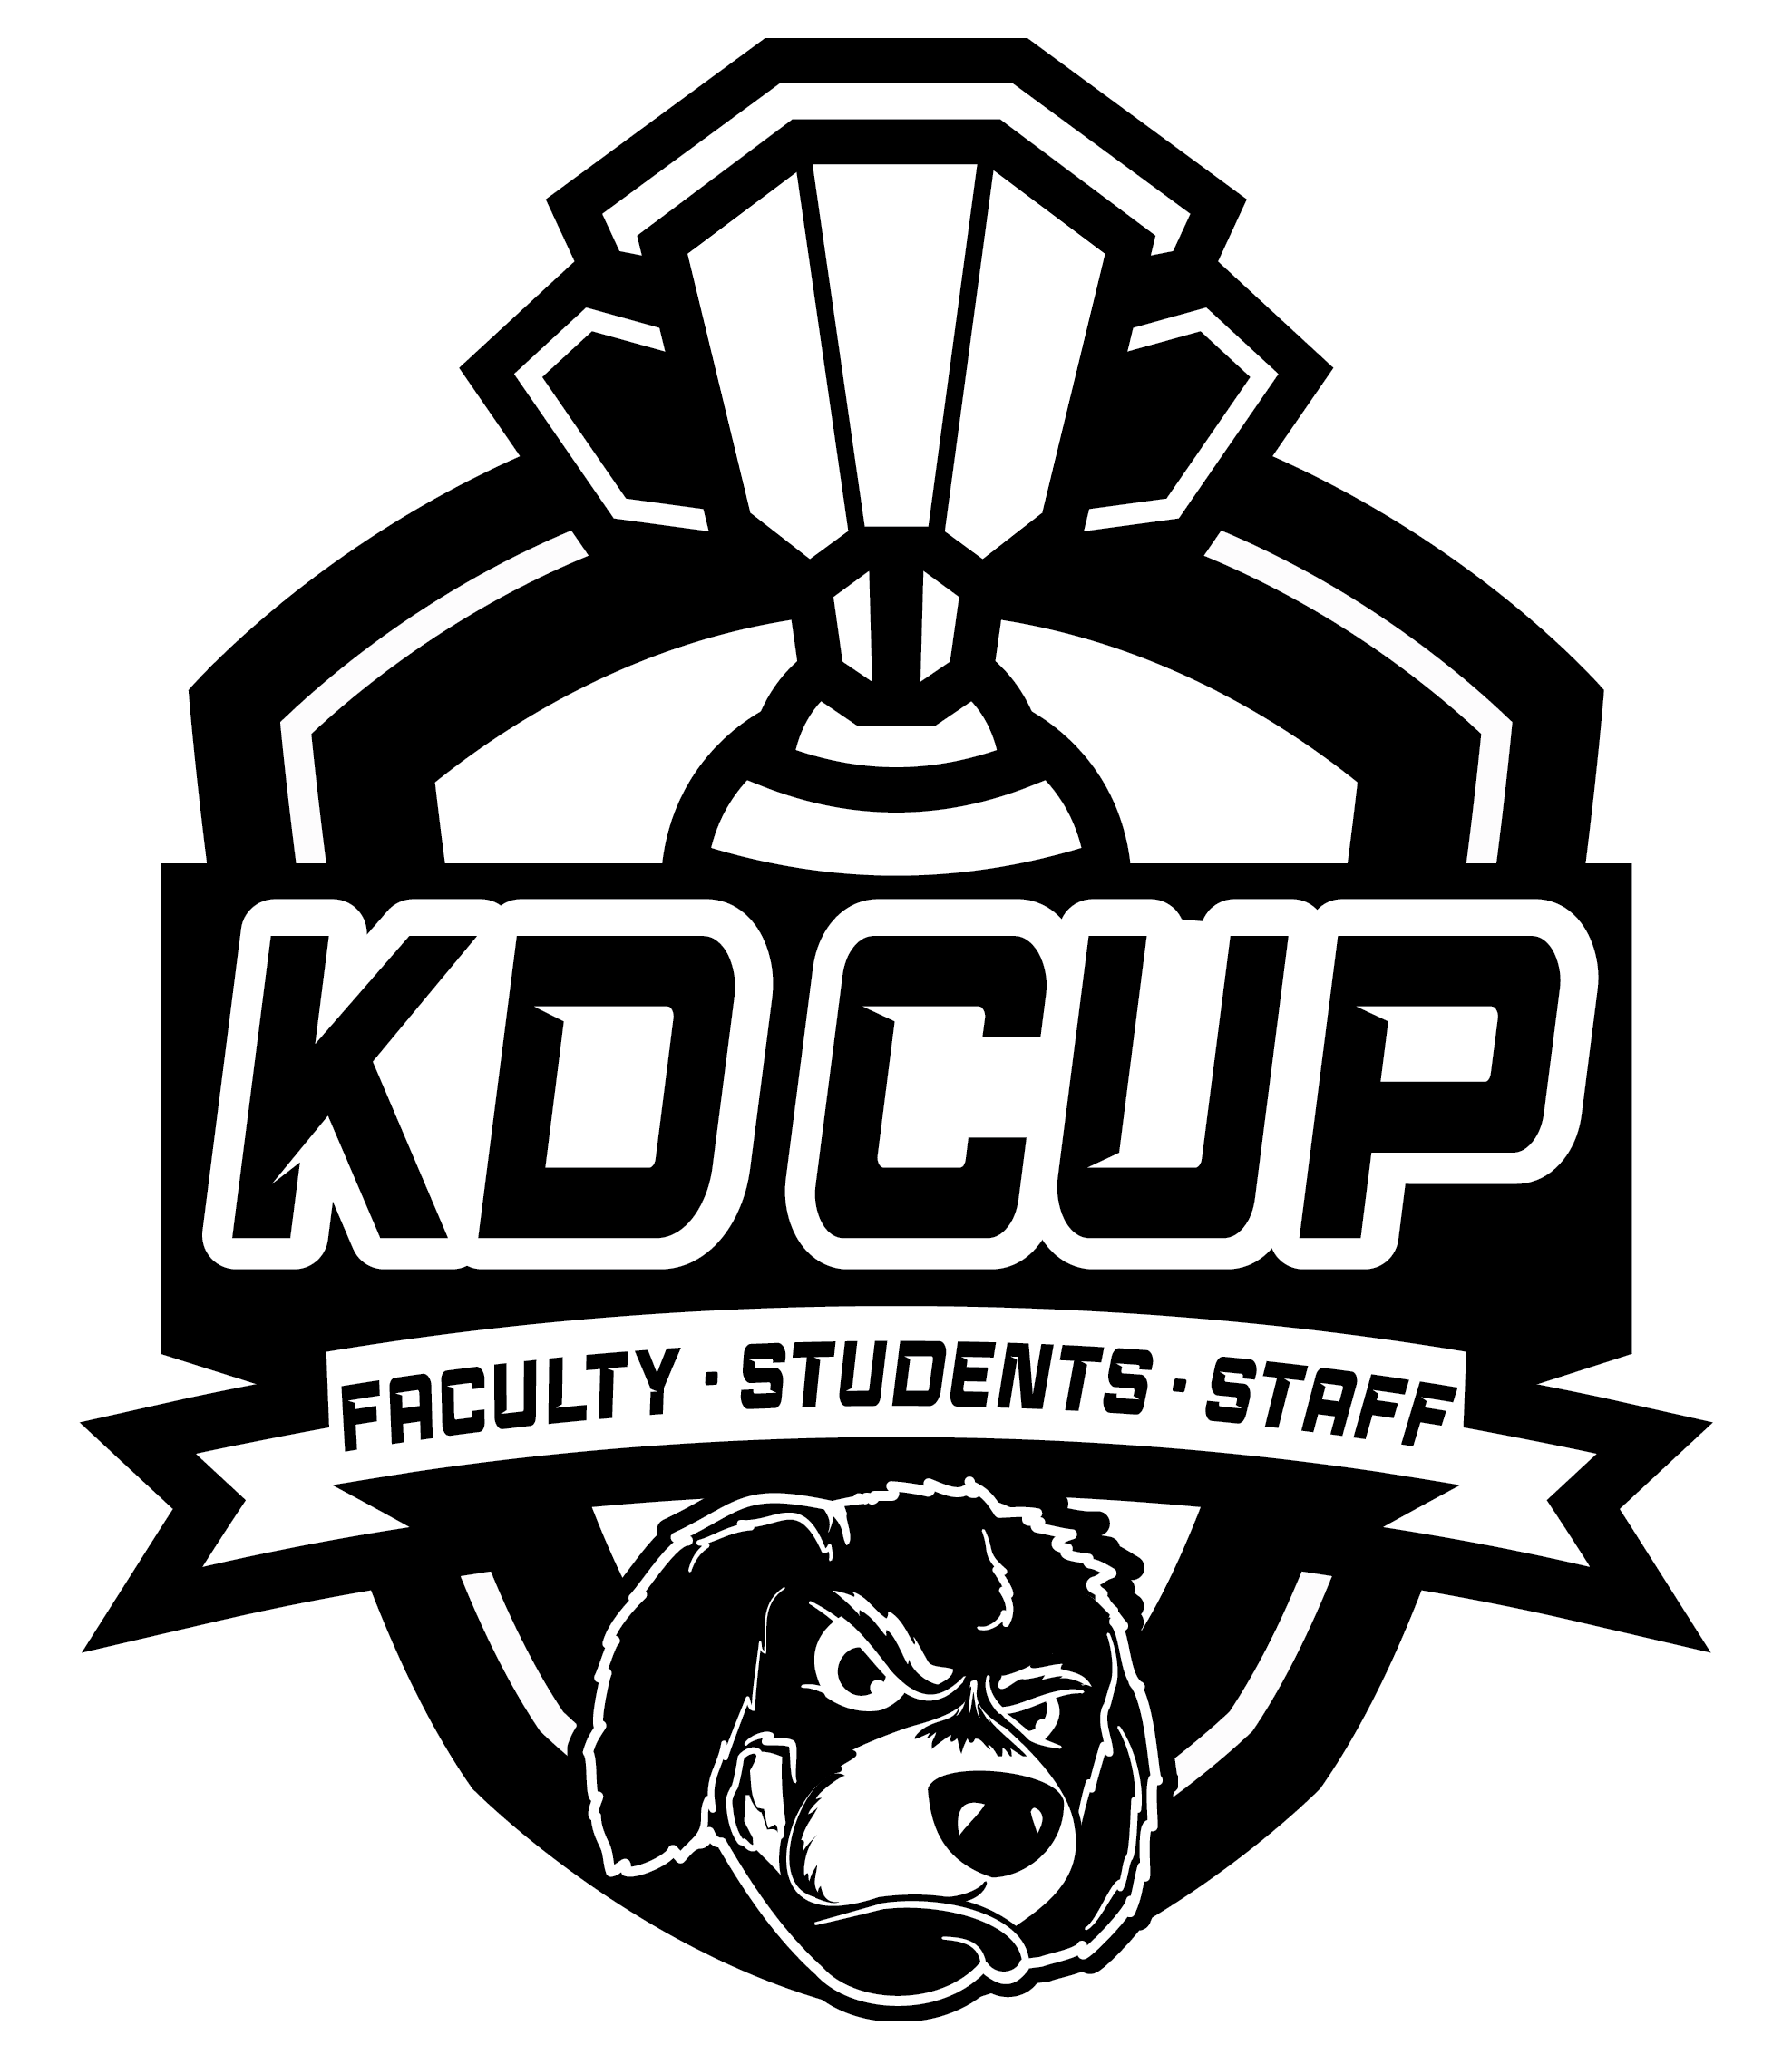 KD Cup logo